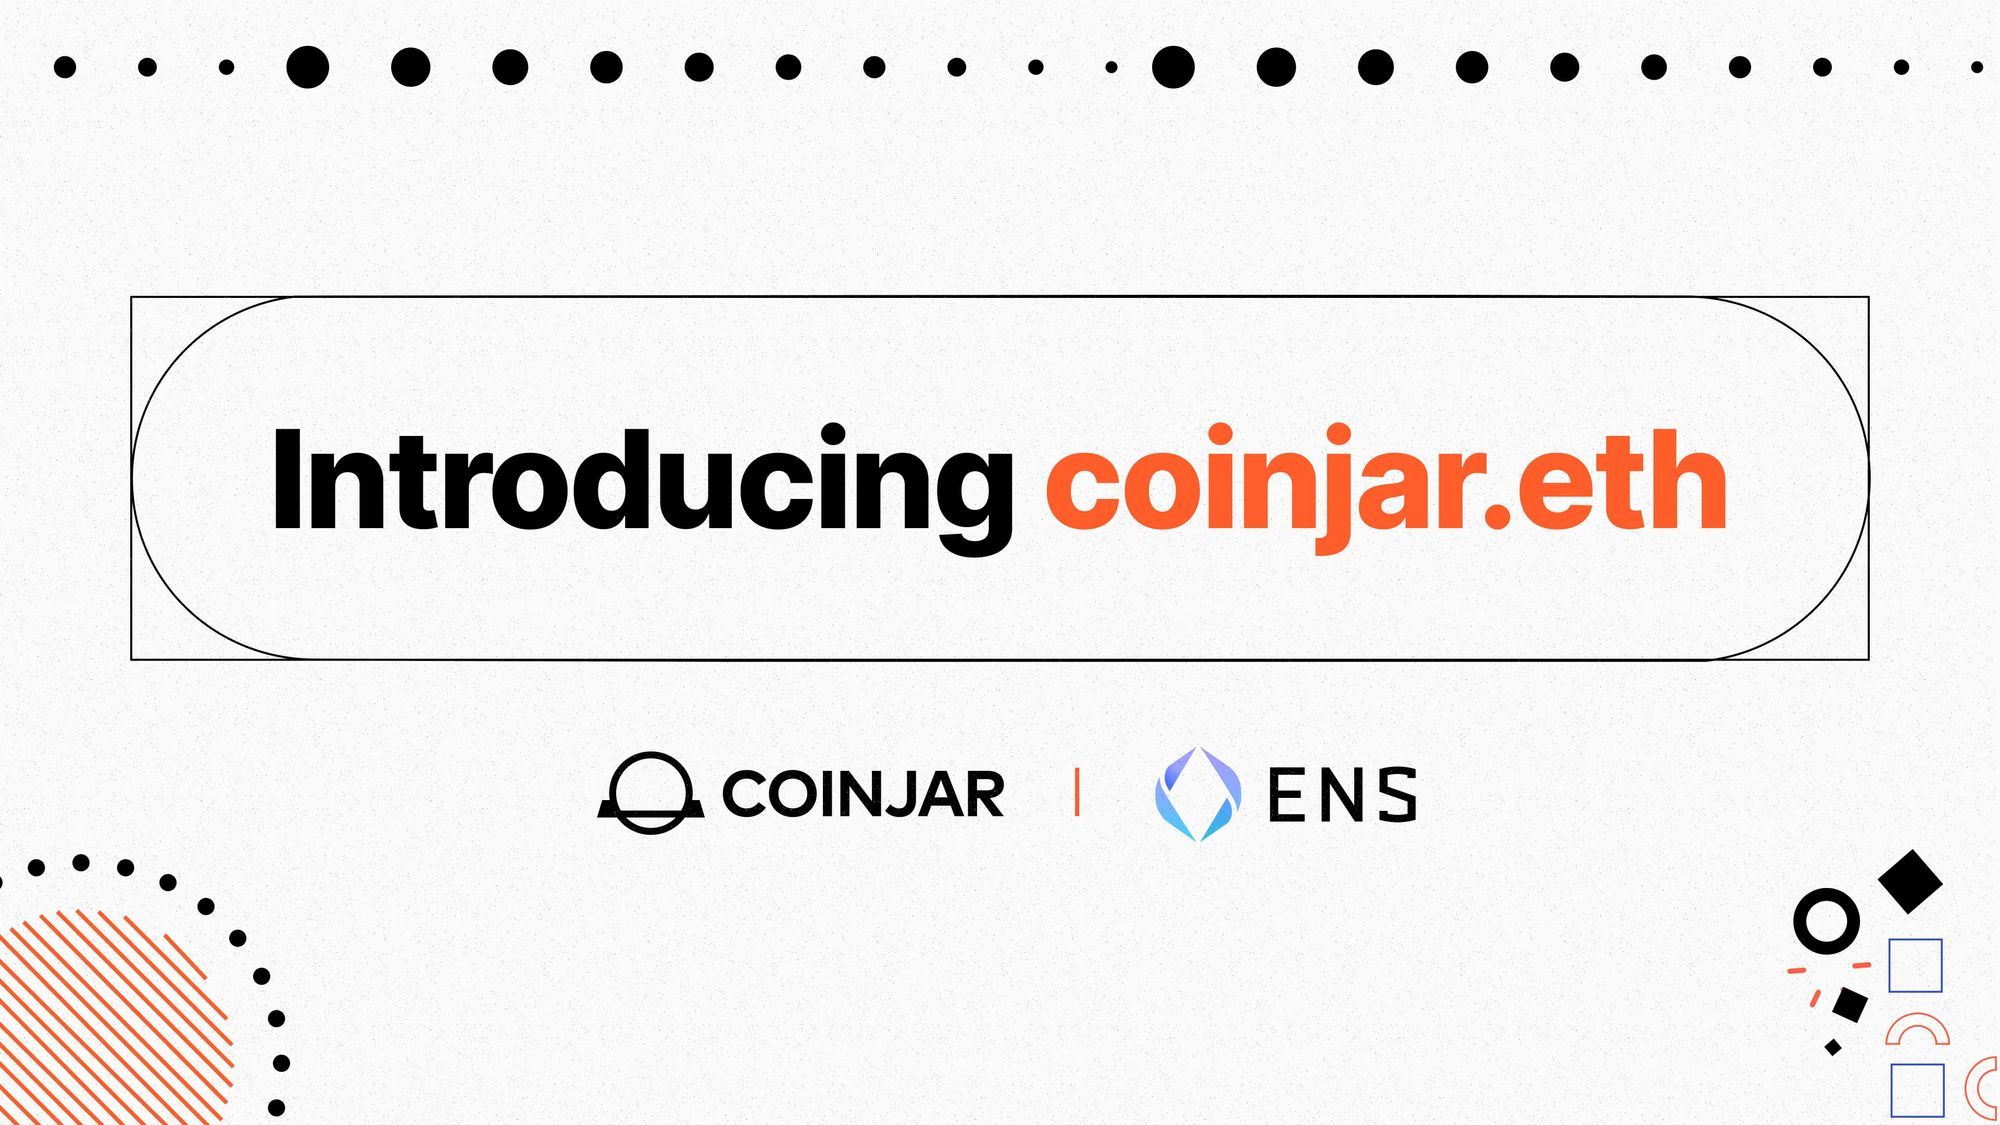 Introducing coinjar.eth